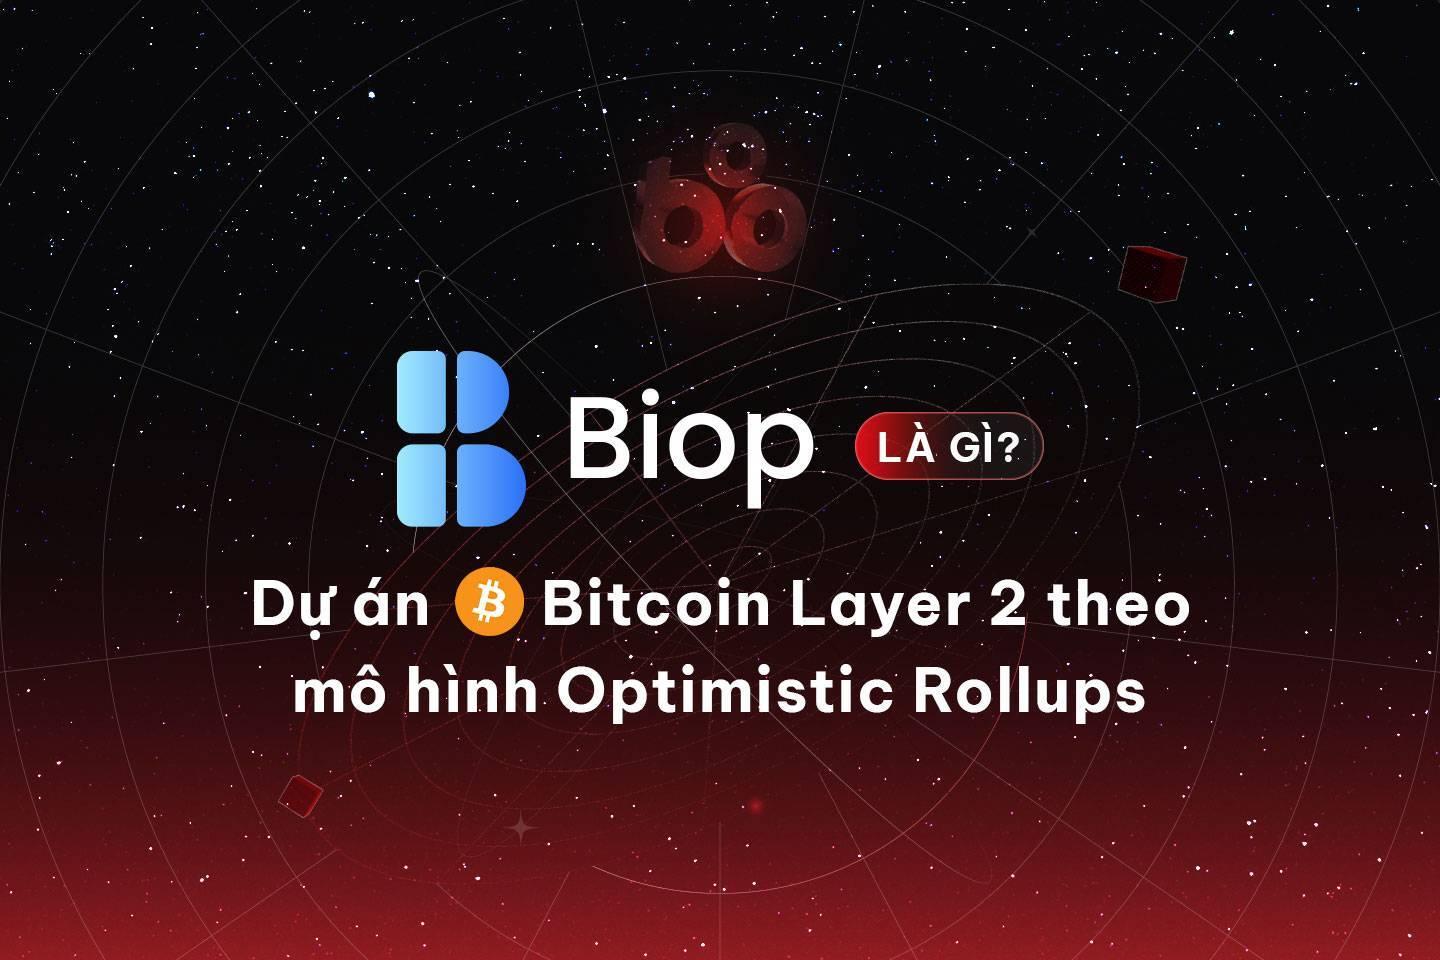 biop-la-gi-du-an-bitcoin-layer-2-theo-mo-hinh-optimistic-rollups